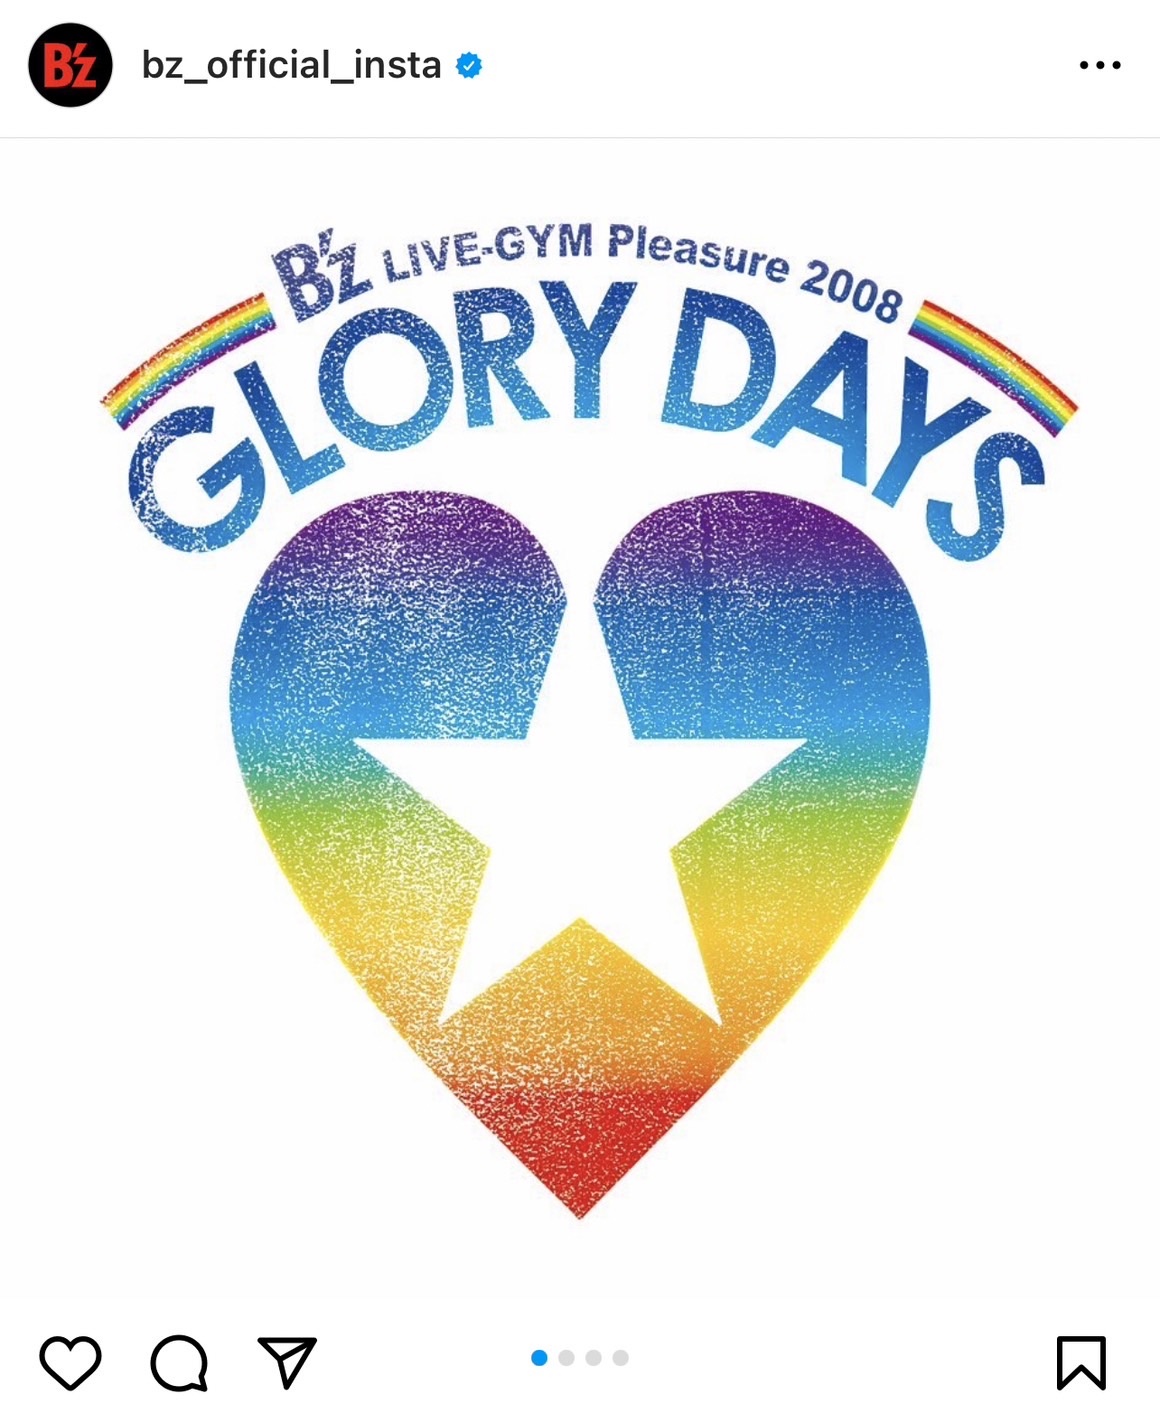 『B'z LIVE-GYM Pleasure 2008 -GLORY DAYS-』のツアーロゴの画像